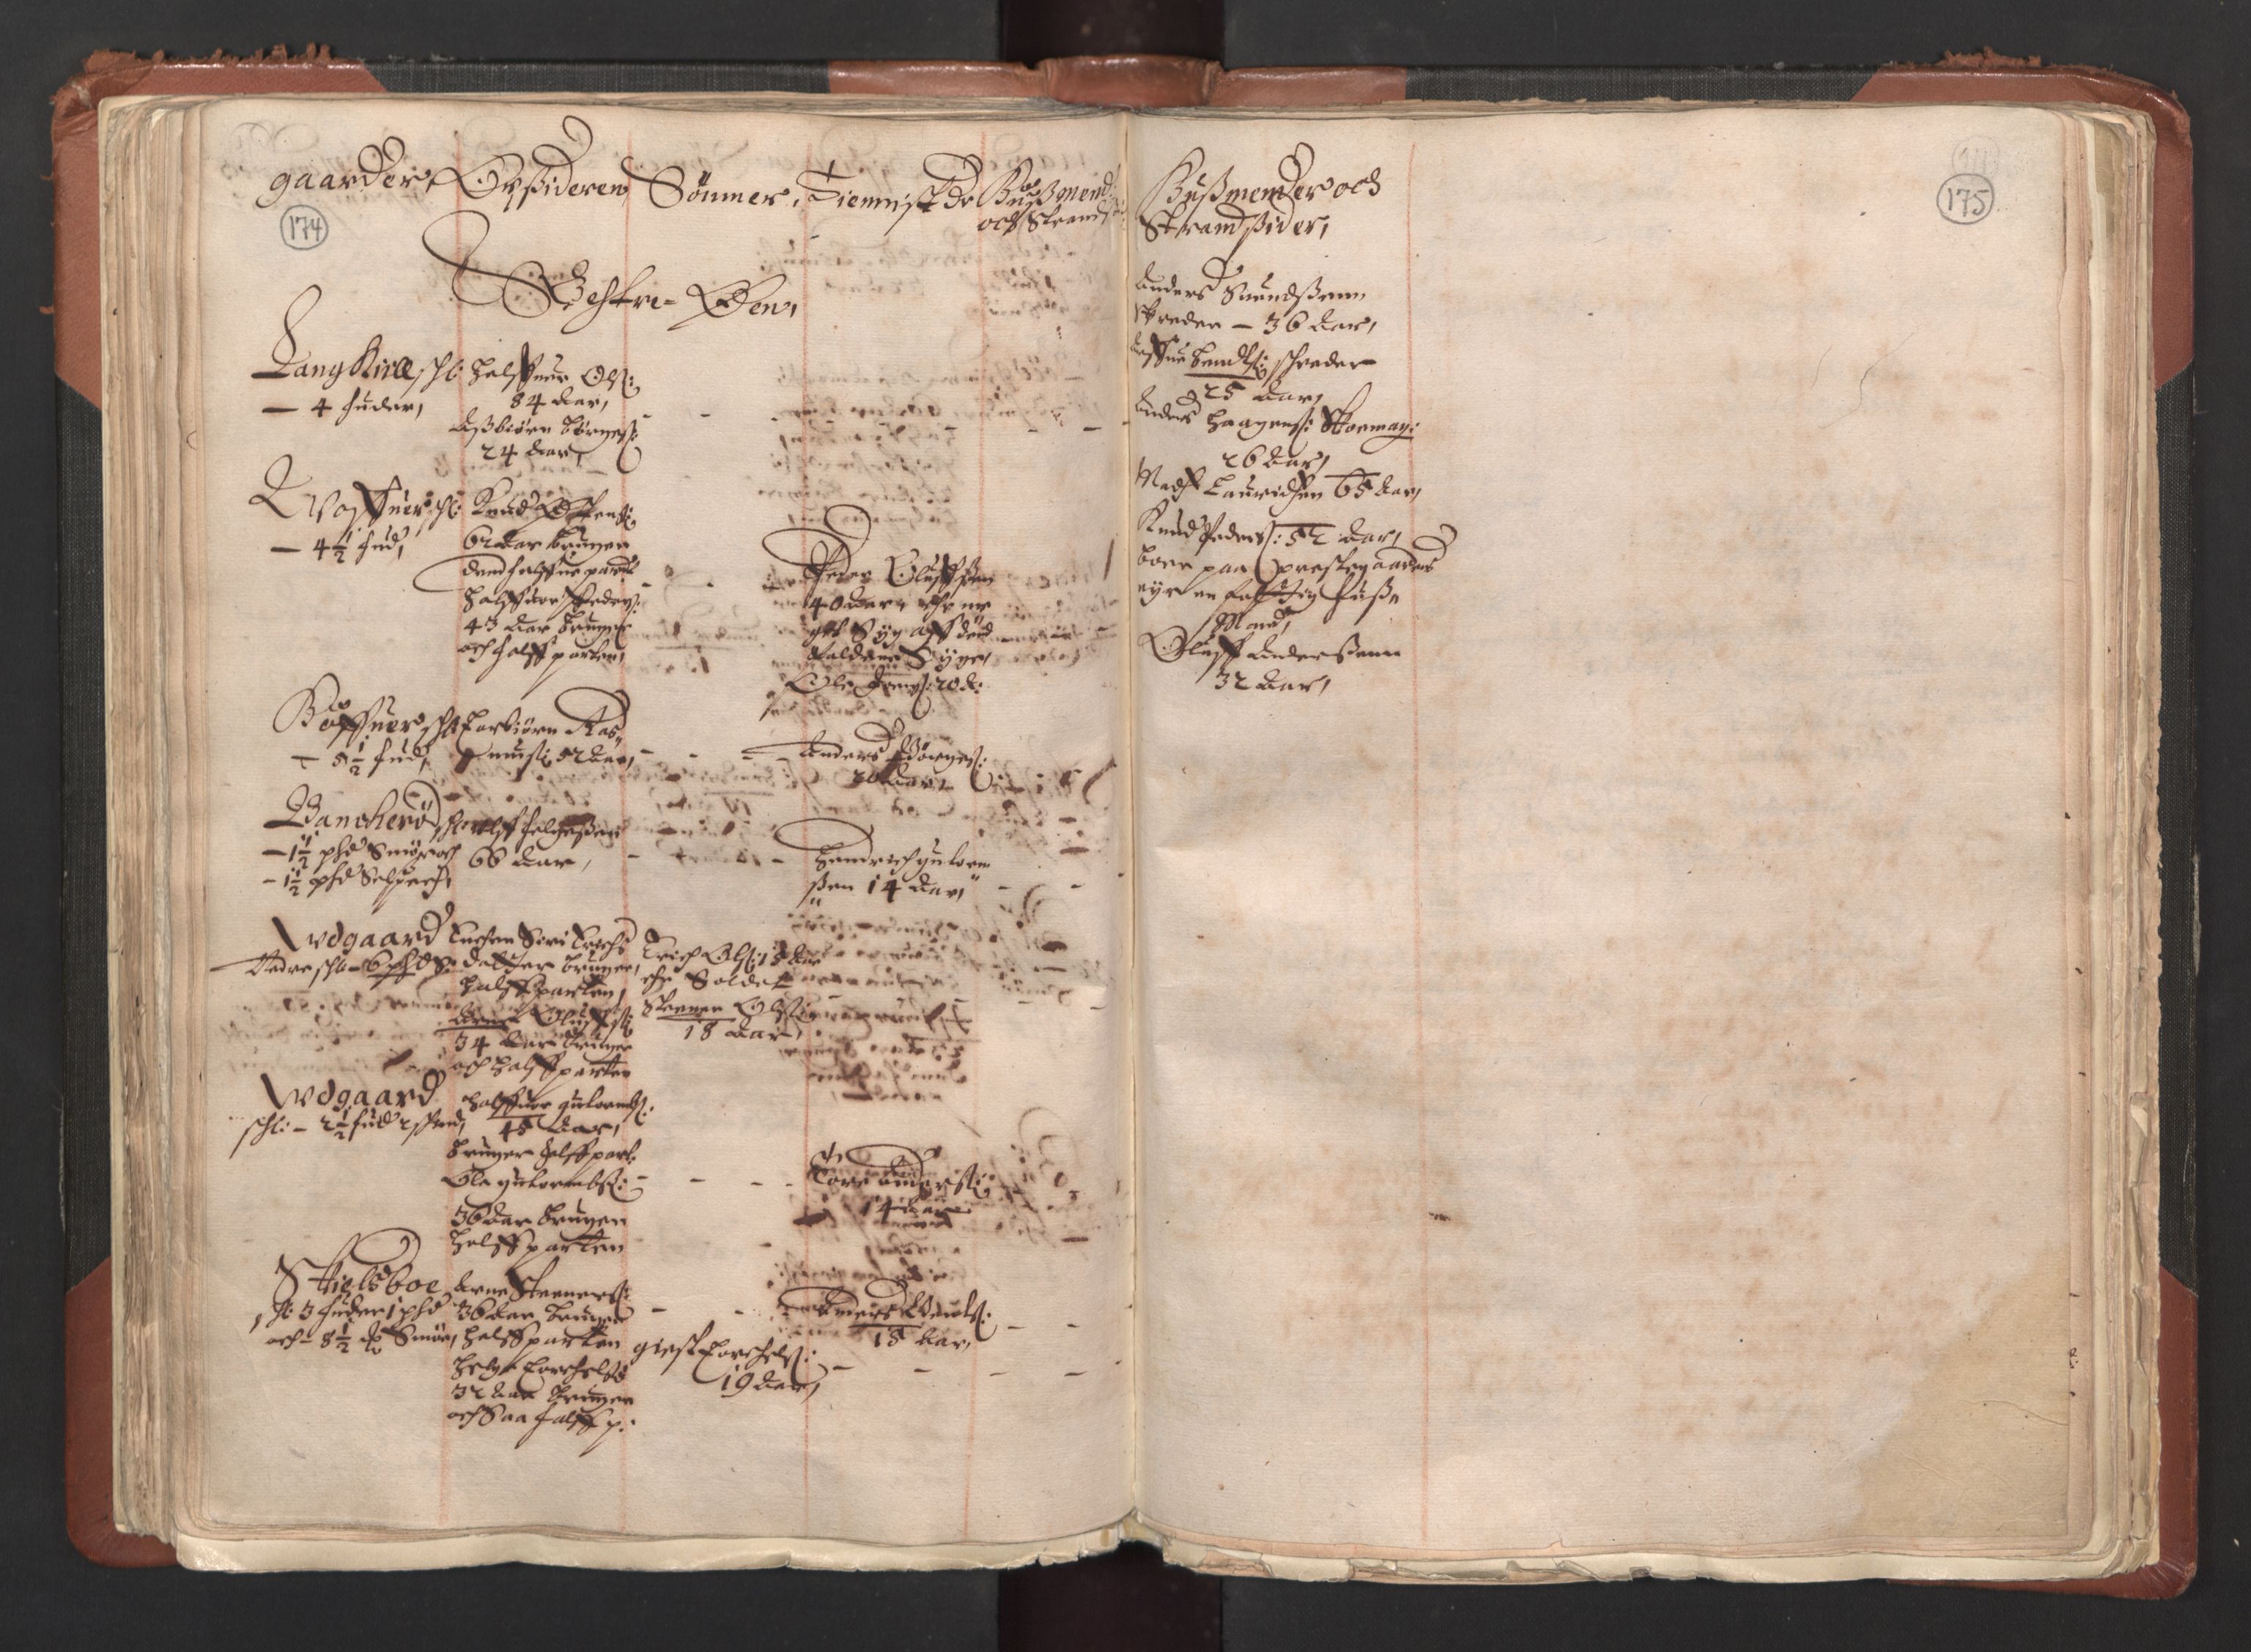 RA, Fogdenes og sorenskrivernes manntall 1664-1666, nr. 1: Fogderier (len og skipreider) i nåværende Østfold fylke, 1664, s. 174-175